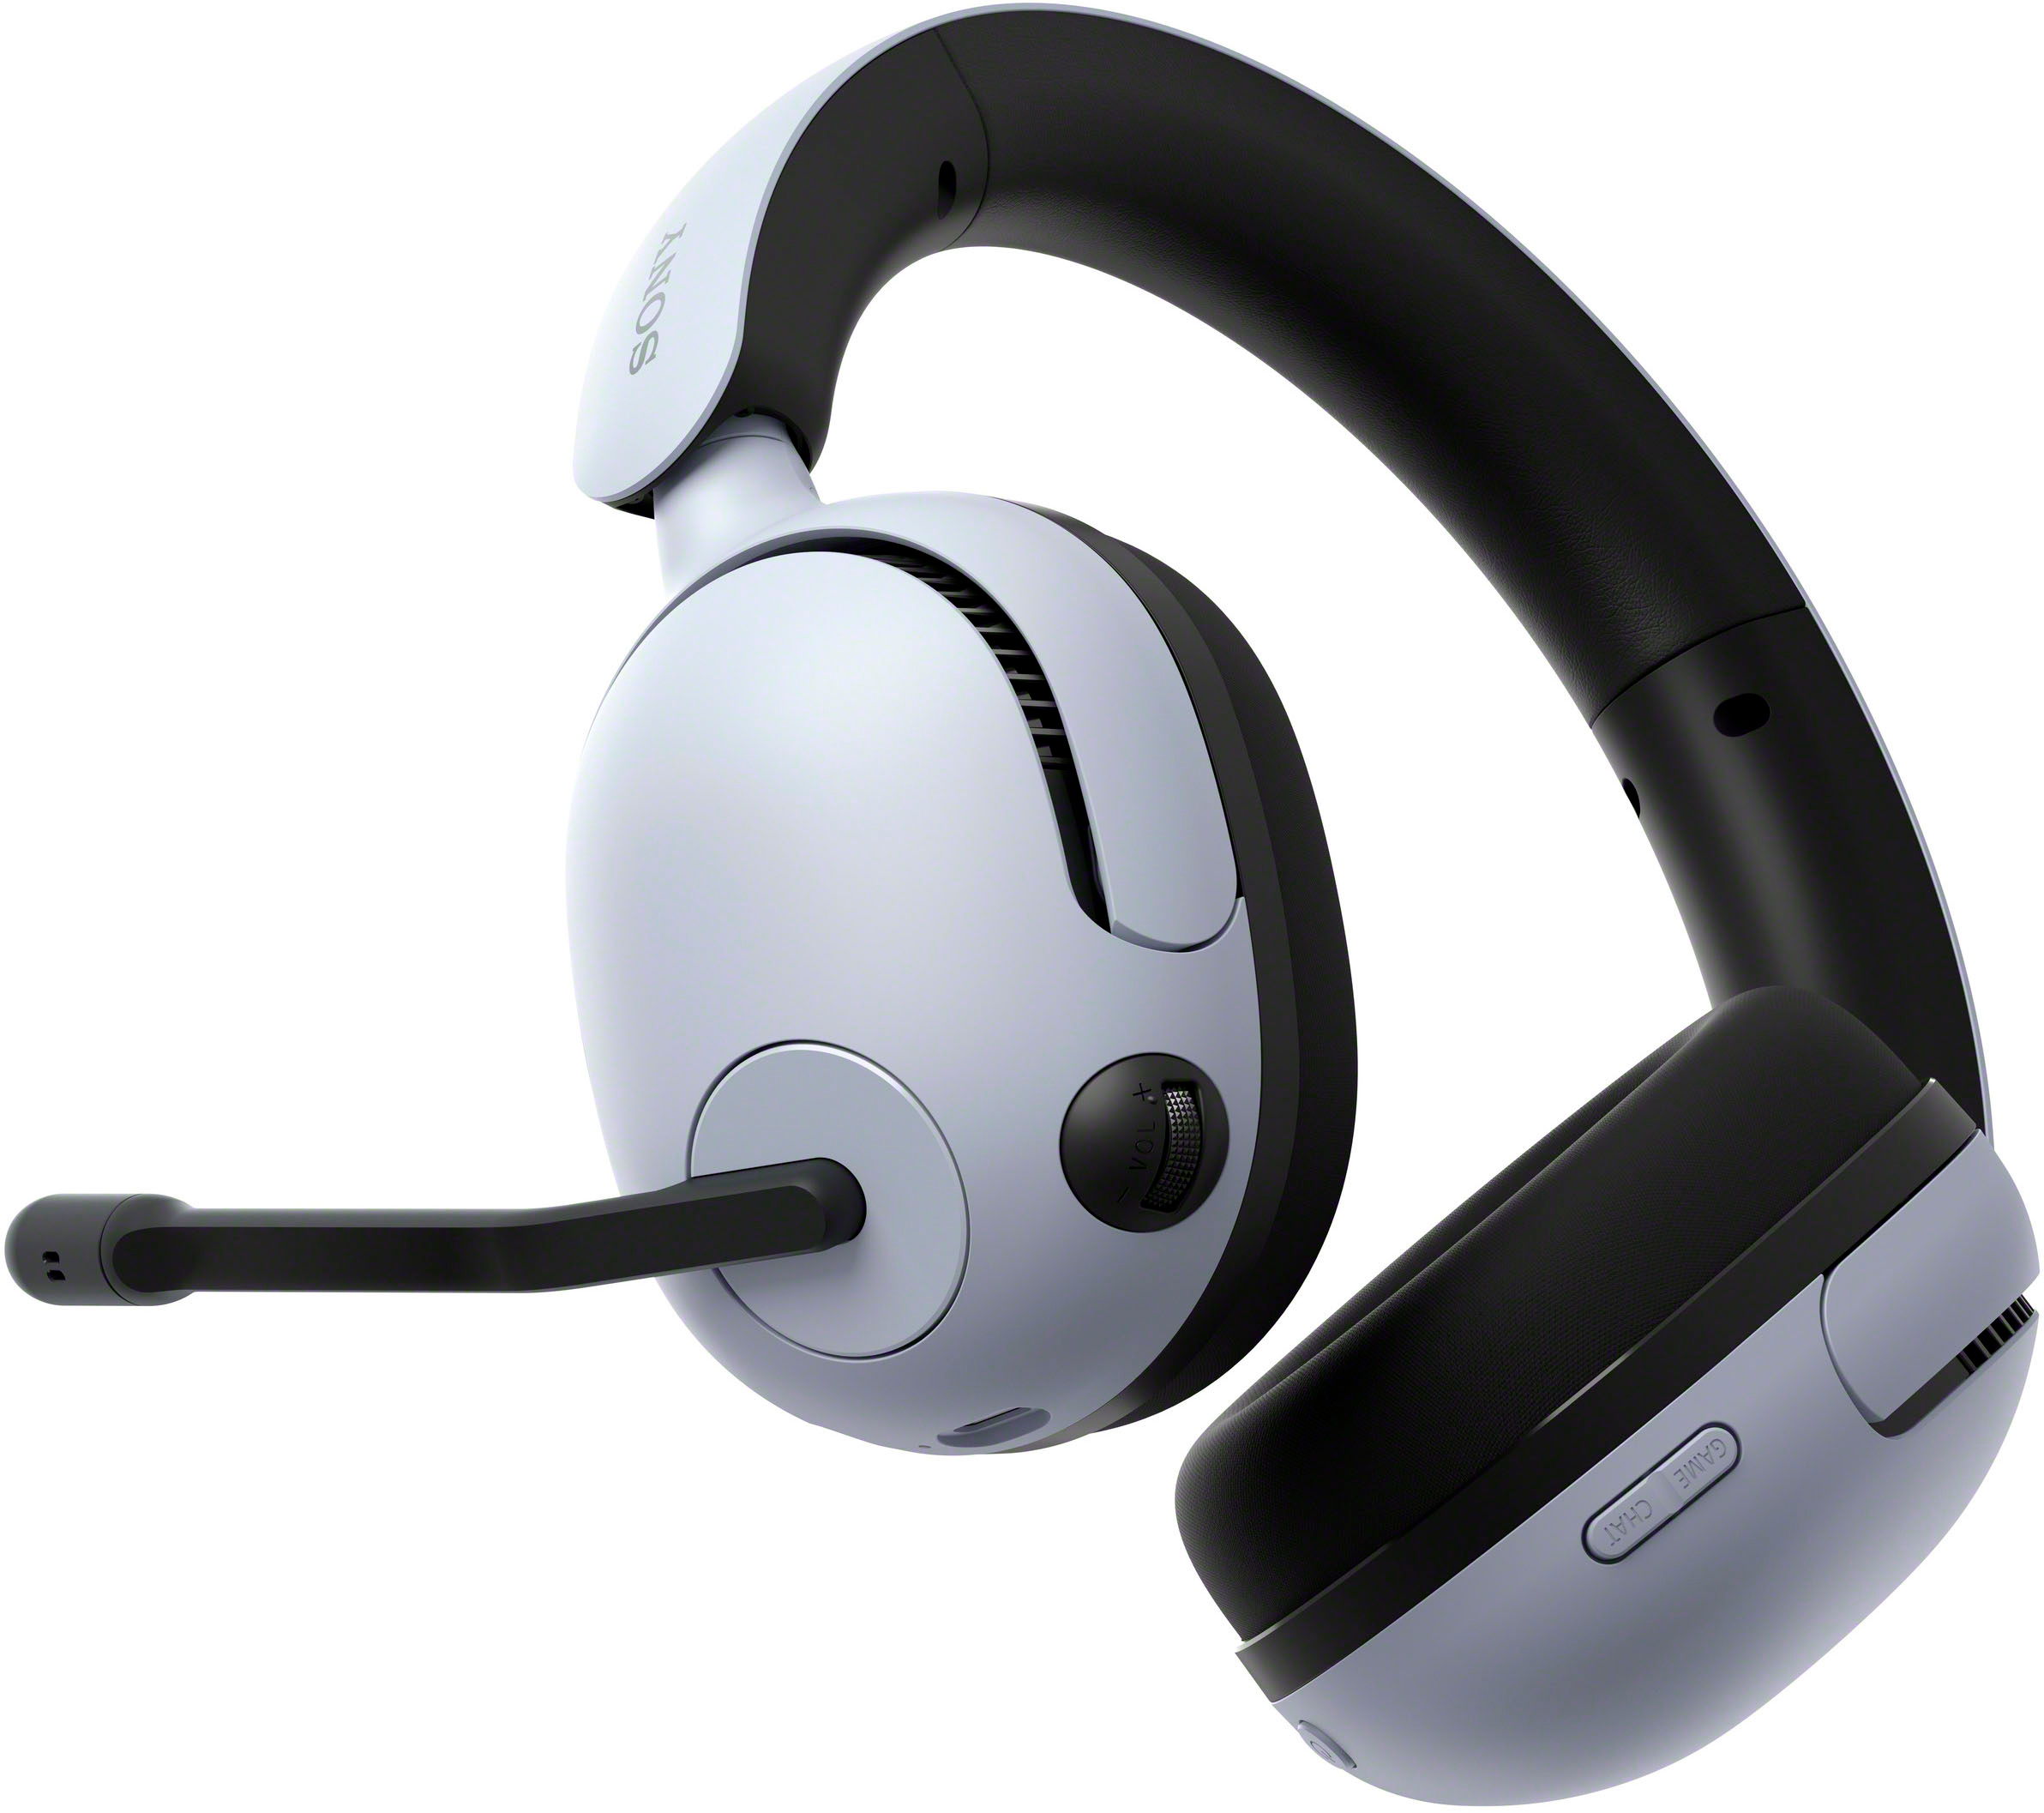 Sony INZONE H5 Wireless Gaming Headset White WHG500/W - Best Buy